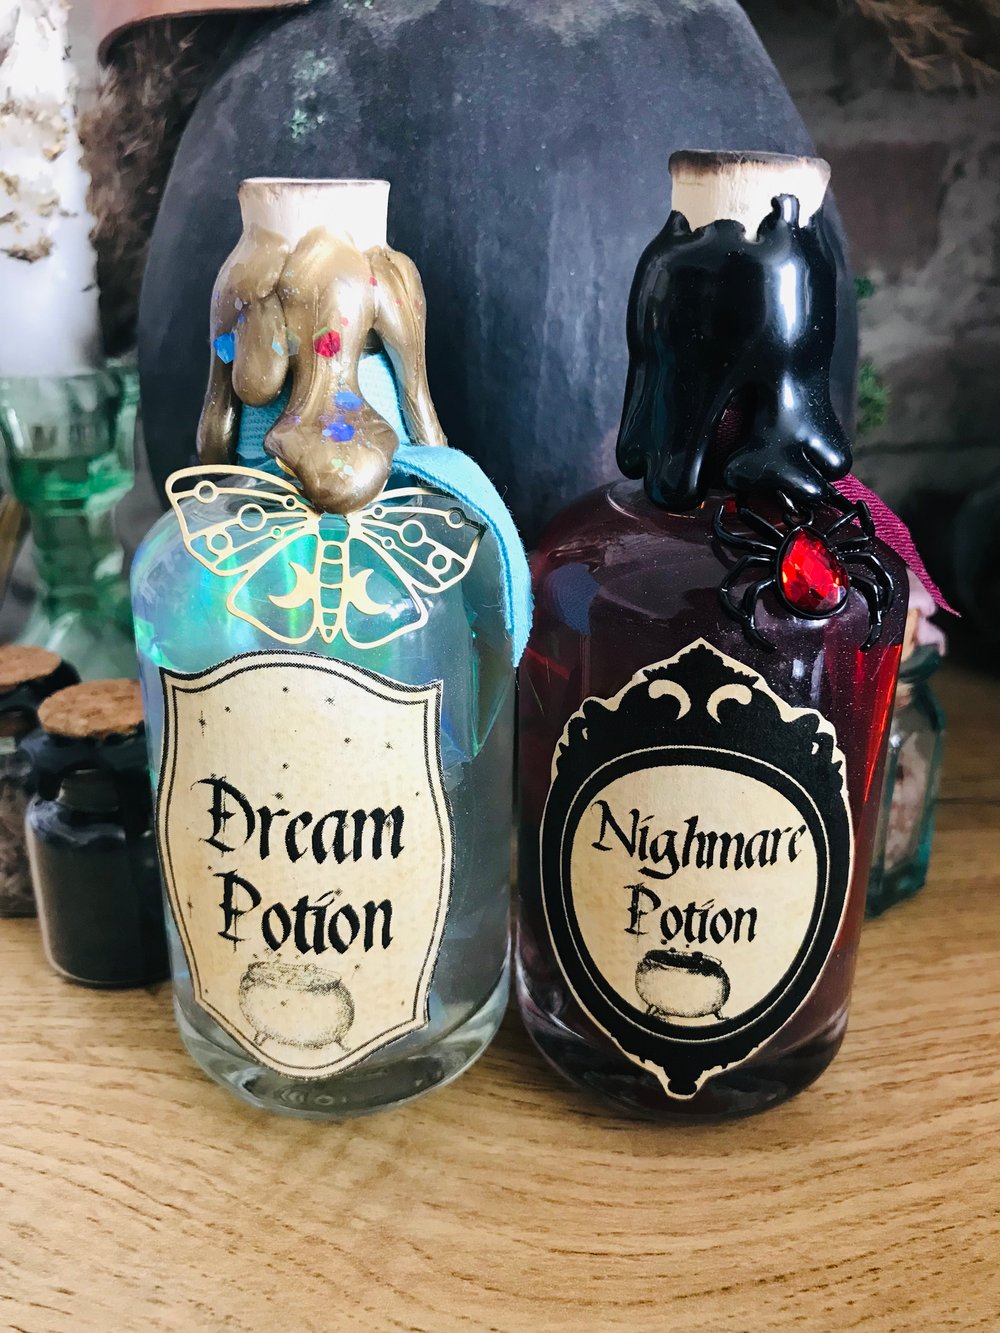 Dream potion & Nightmare potion